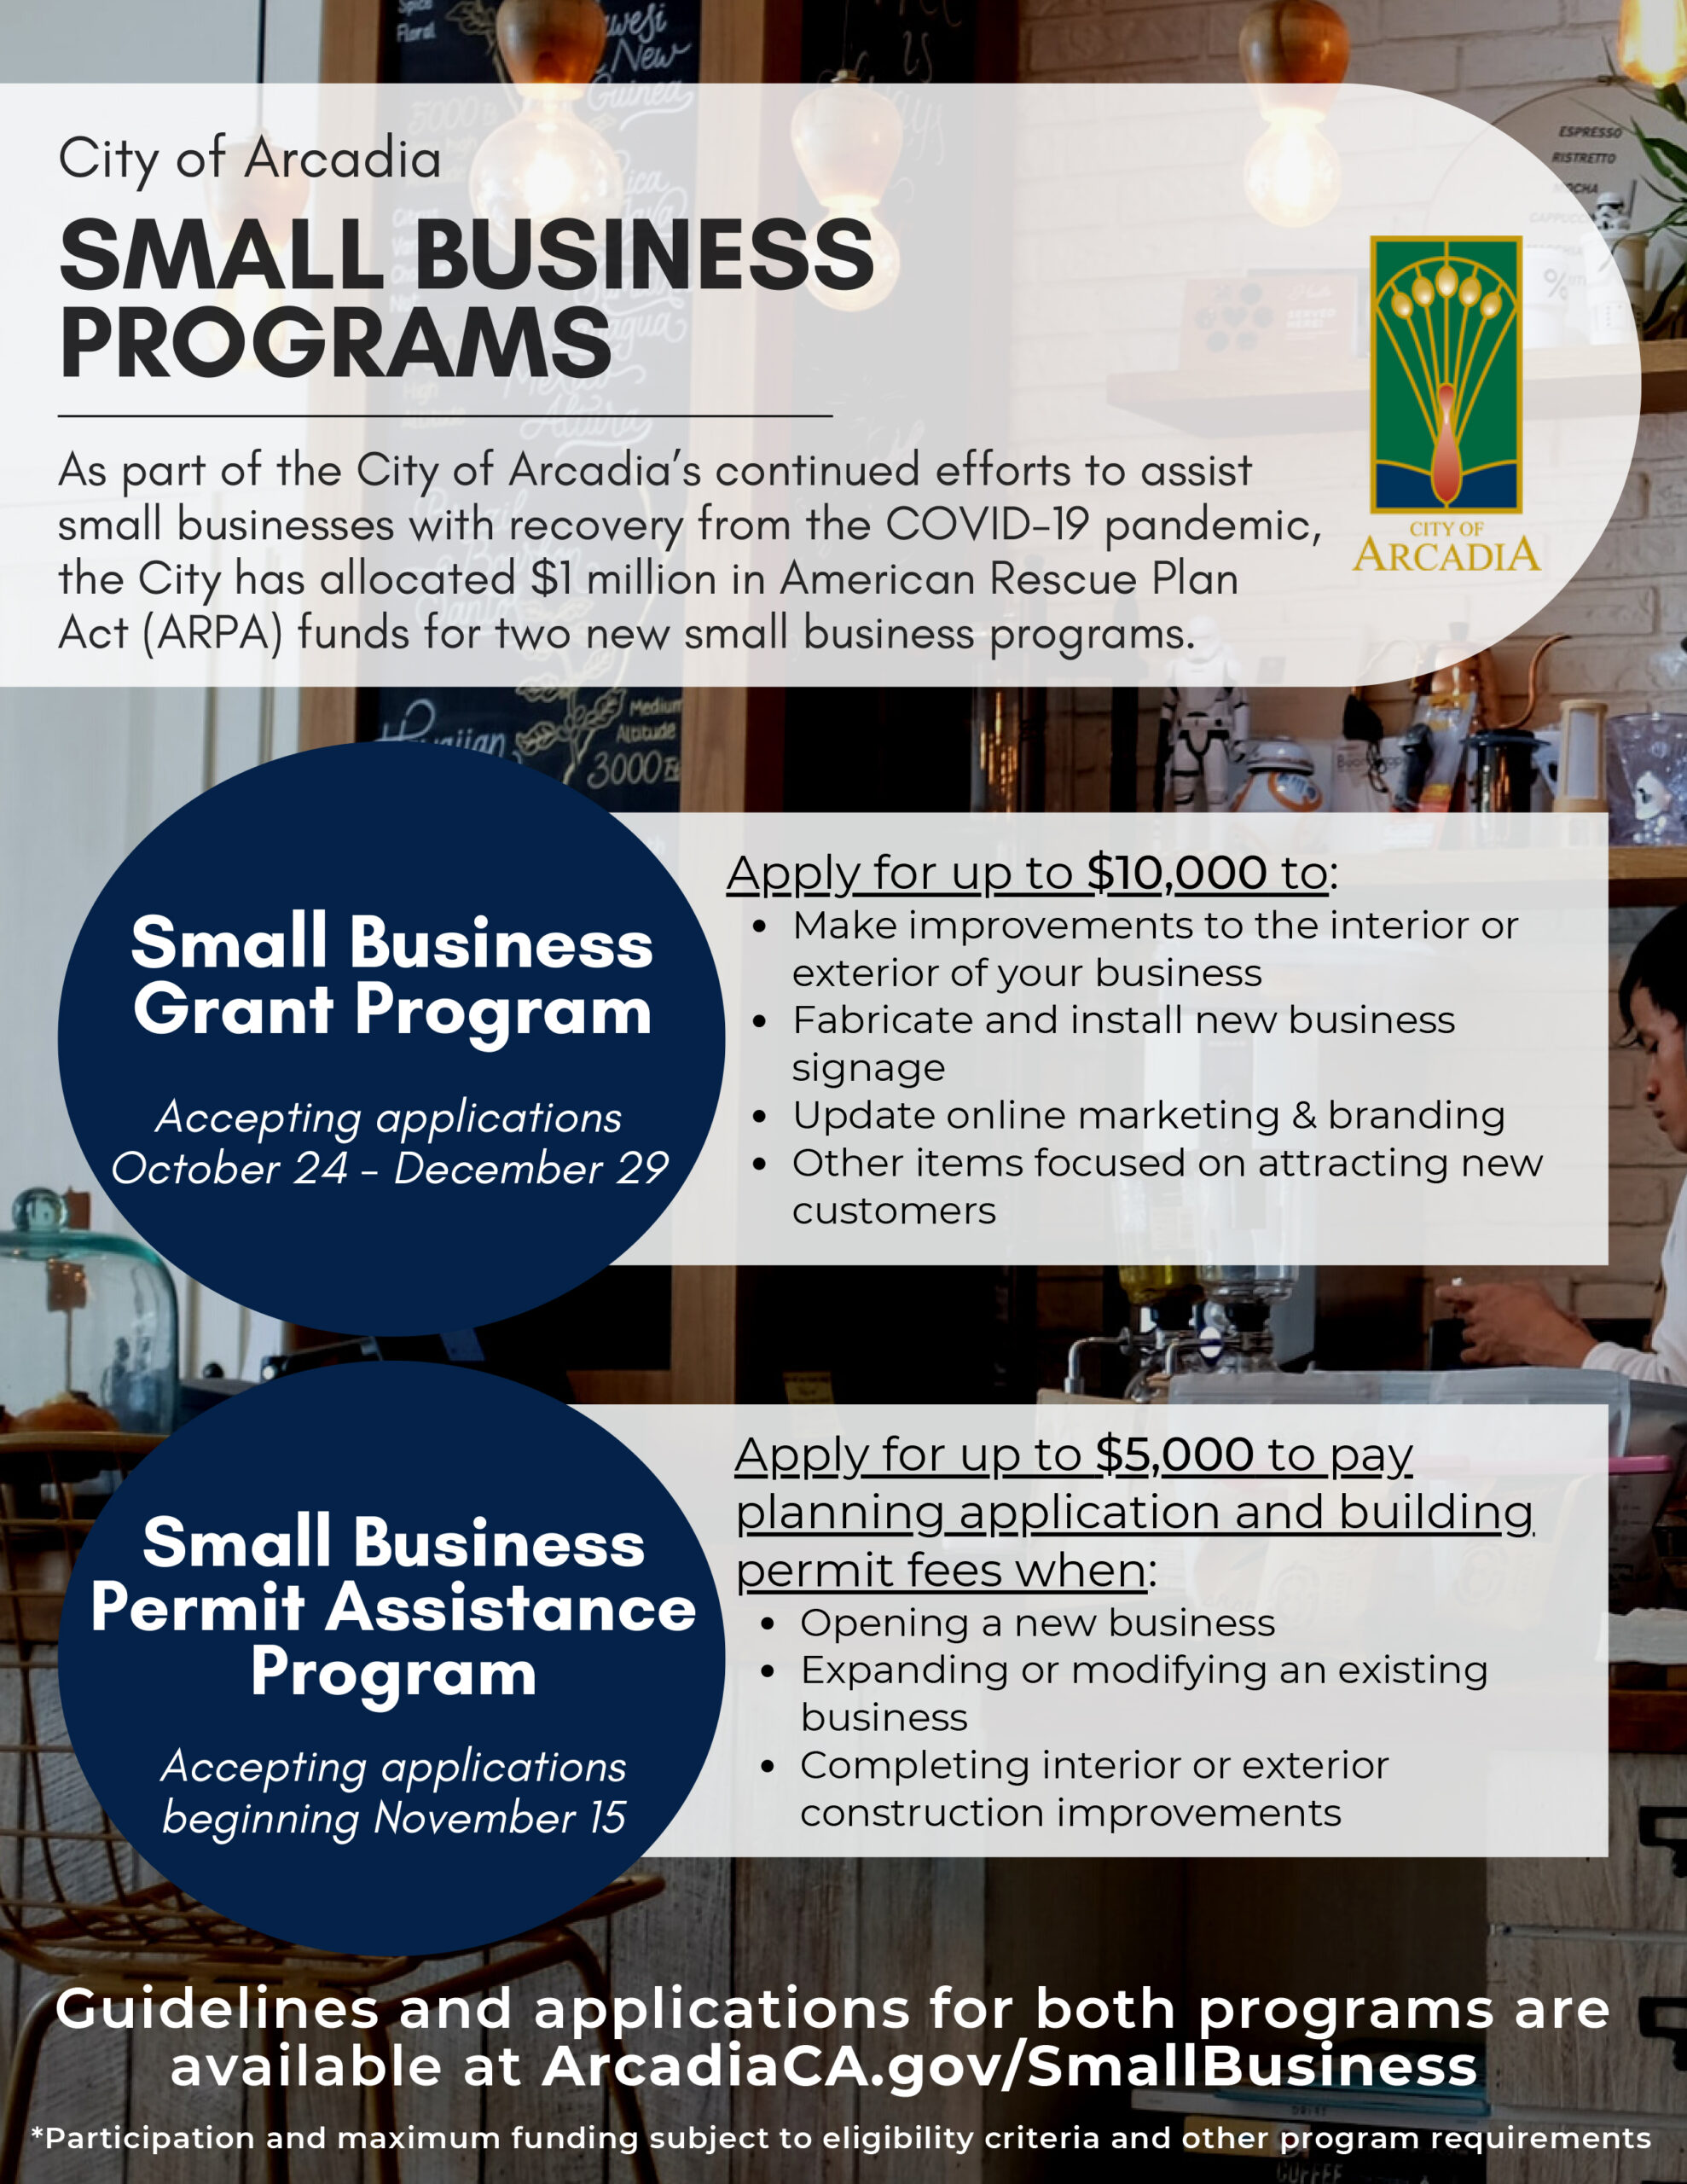 City of Arcadia Small Business Programs 